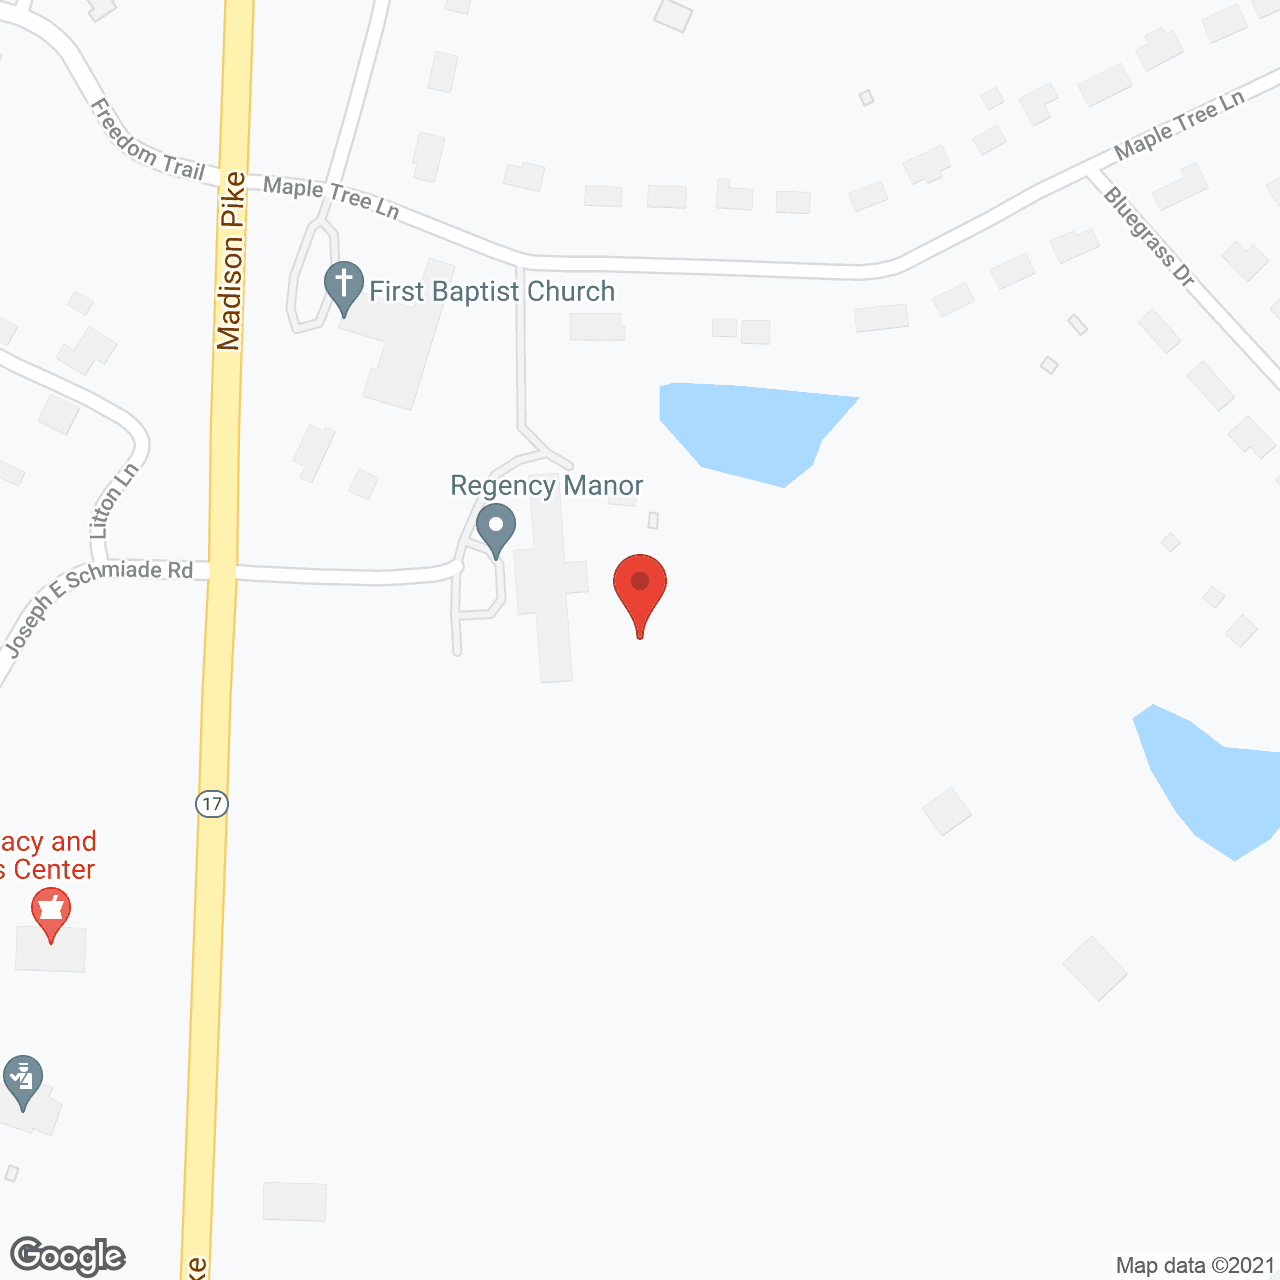 Regency Manor in google map